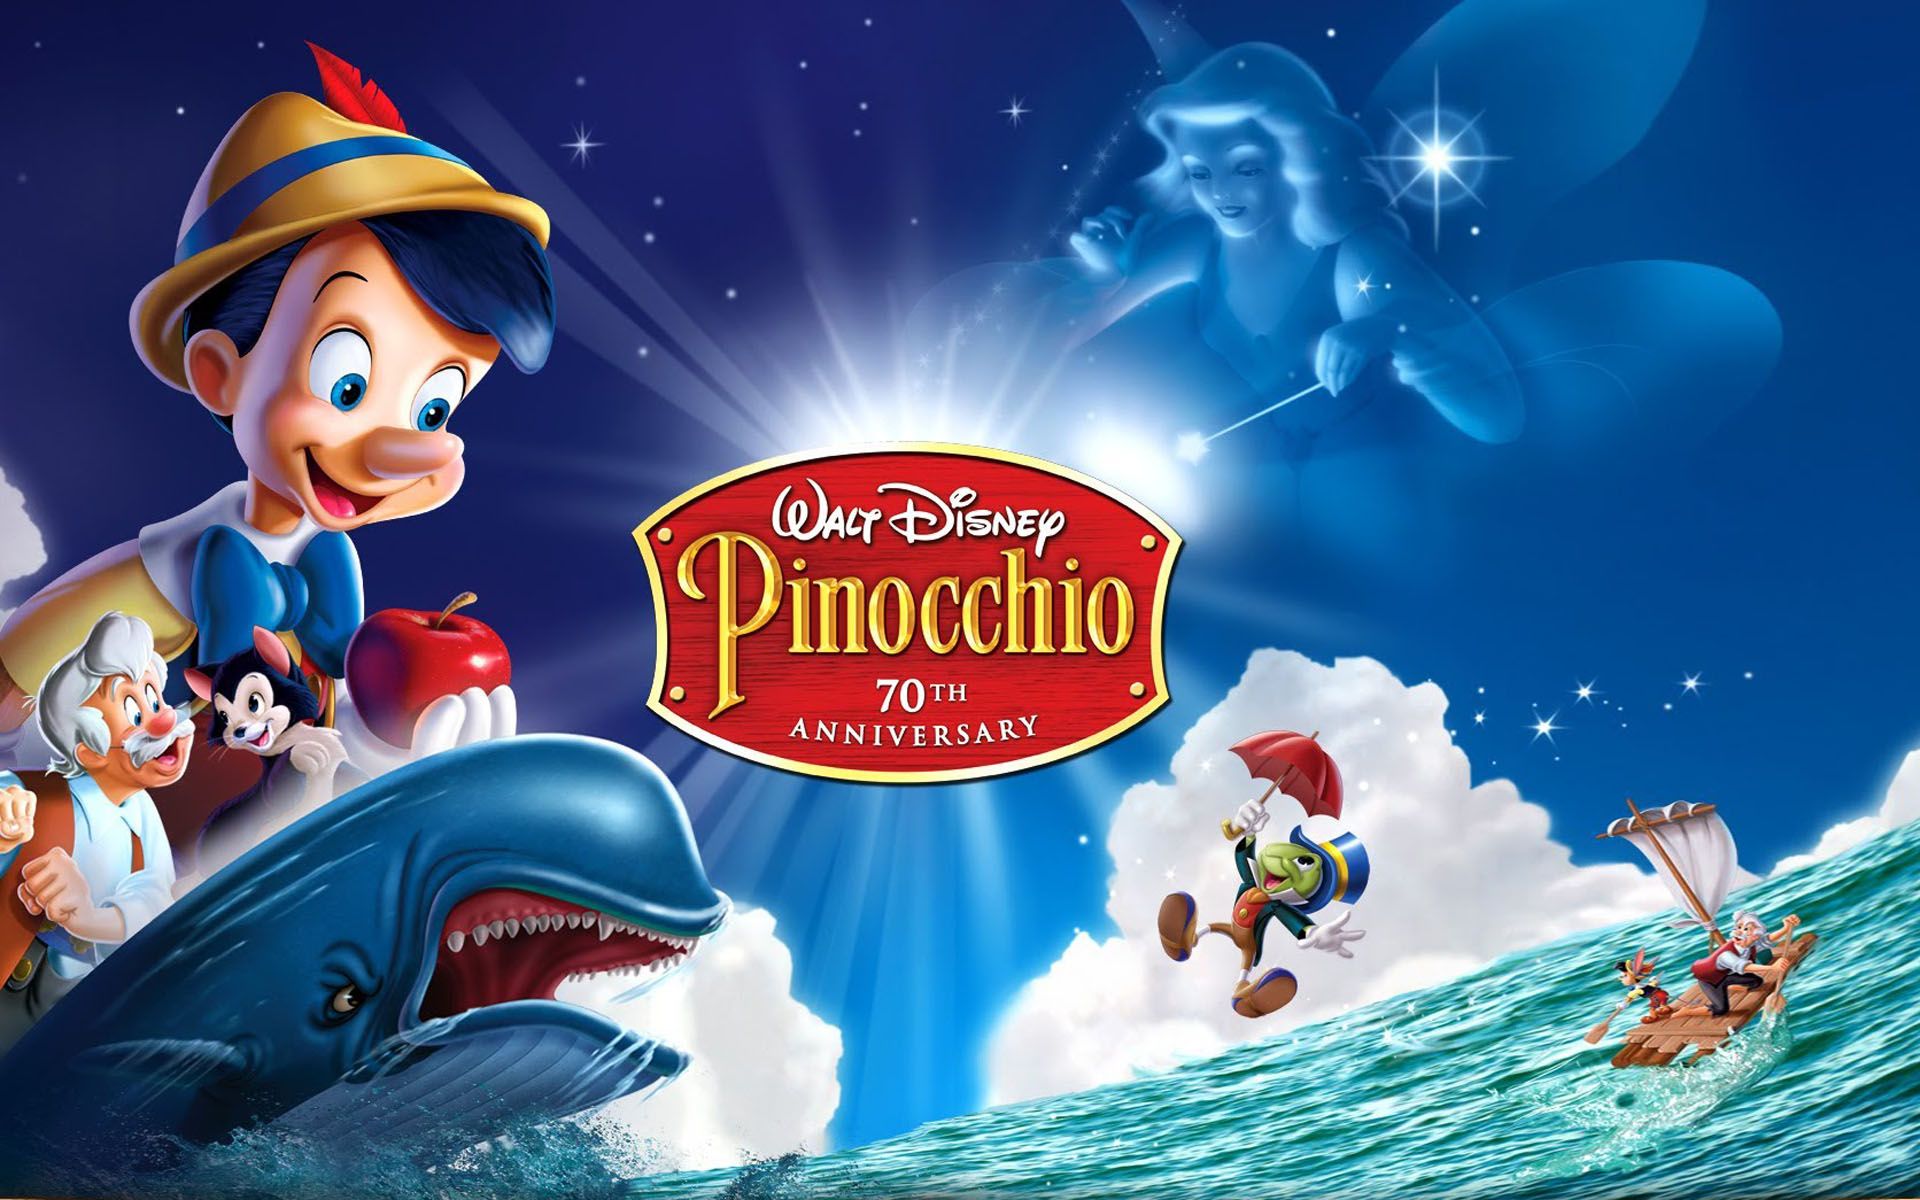 Walt Disney Pinocchio First Time Ever On 2 Disc Platinum Edition Disney Blu Ray & Dvd Desktop Wallpaper Background Free Download 1920x1200, Wallpaper13.com